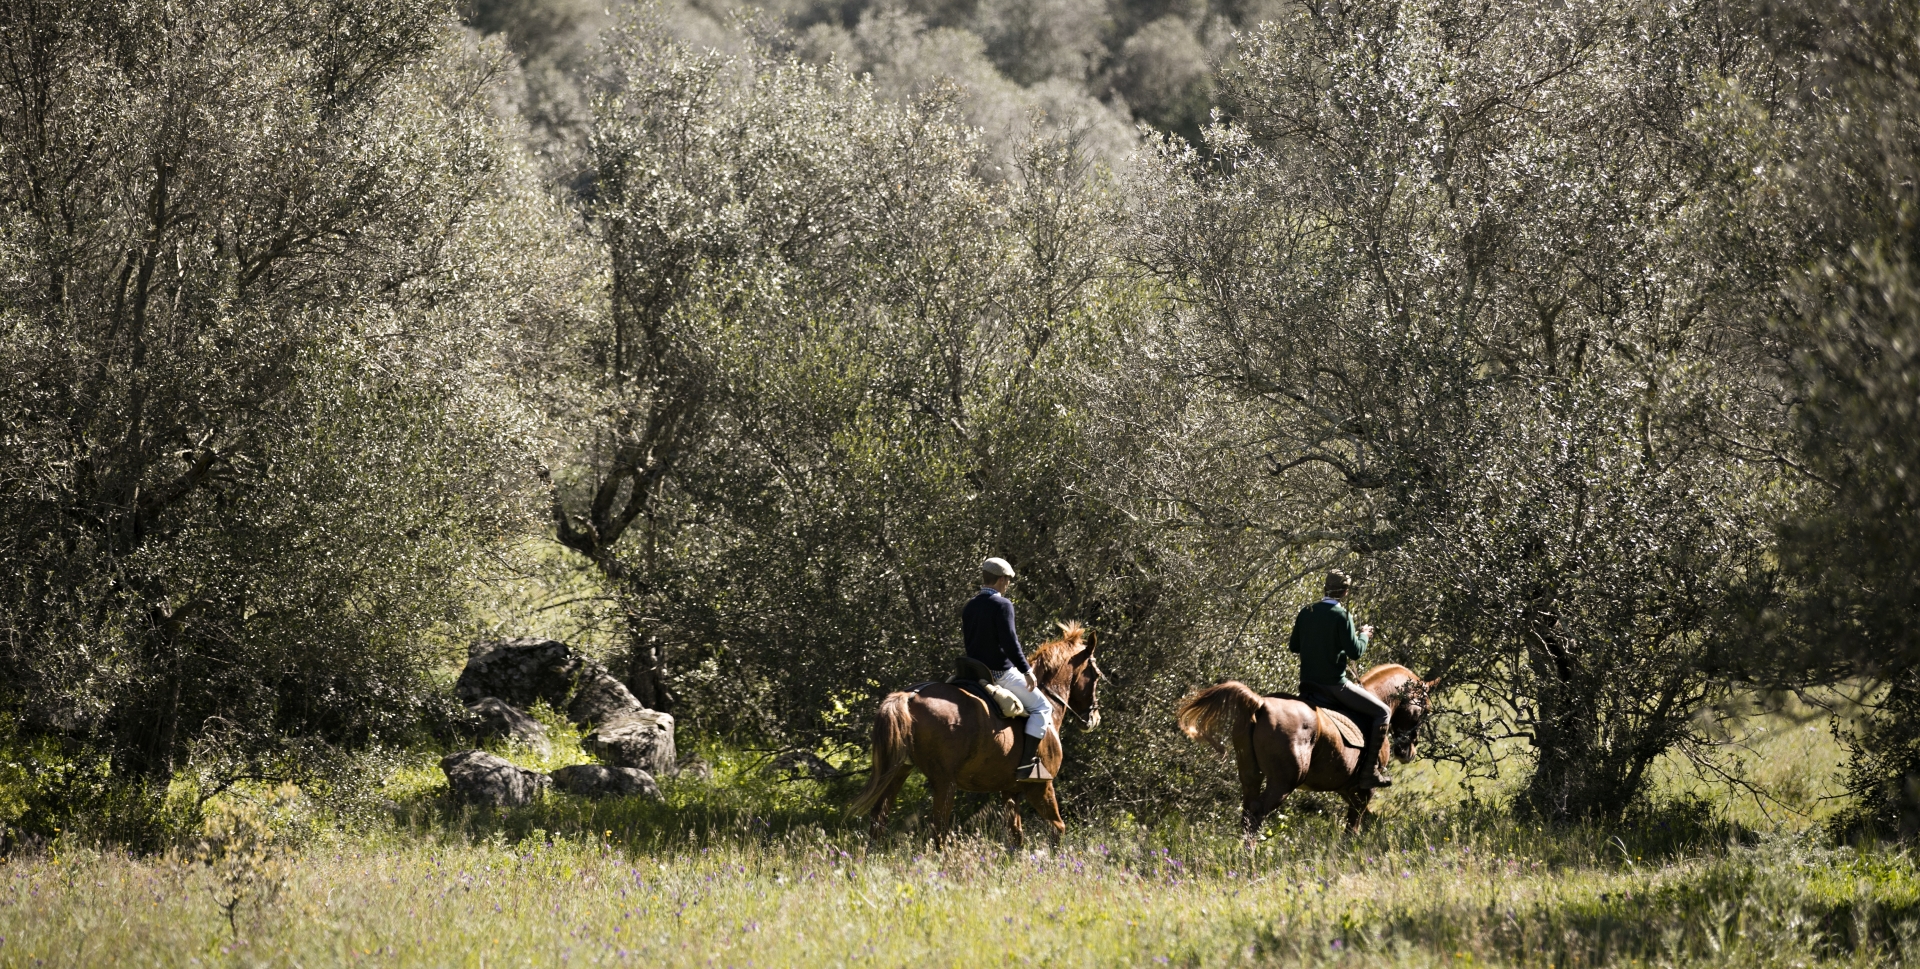 Horse riding - Discover Alentejo and Andalucia